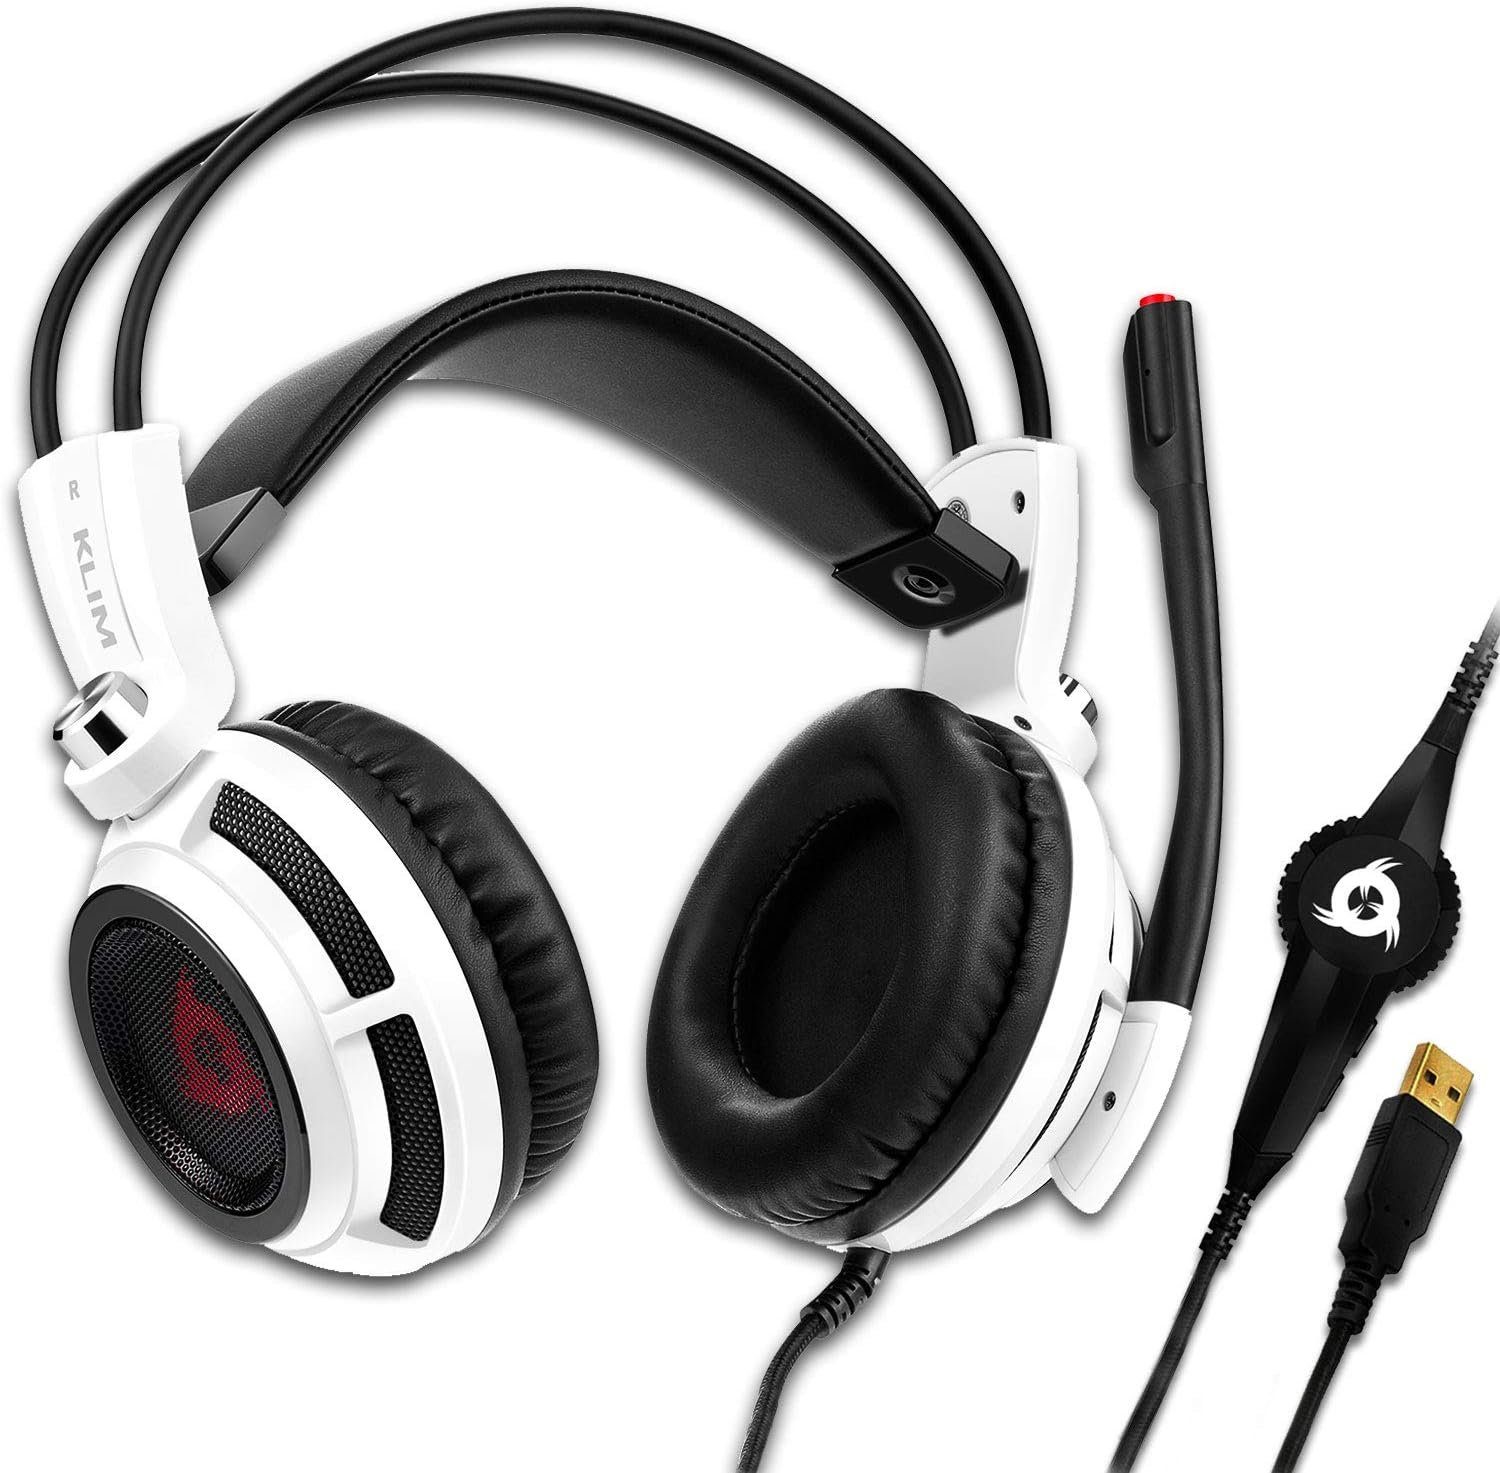 mit Surround-Sound Gaming-Headset KLIM – Hochqualitativer Gamer Integrierte (Headset Klang) 7.1 – Headset Vibrationen, Micro